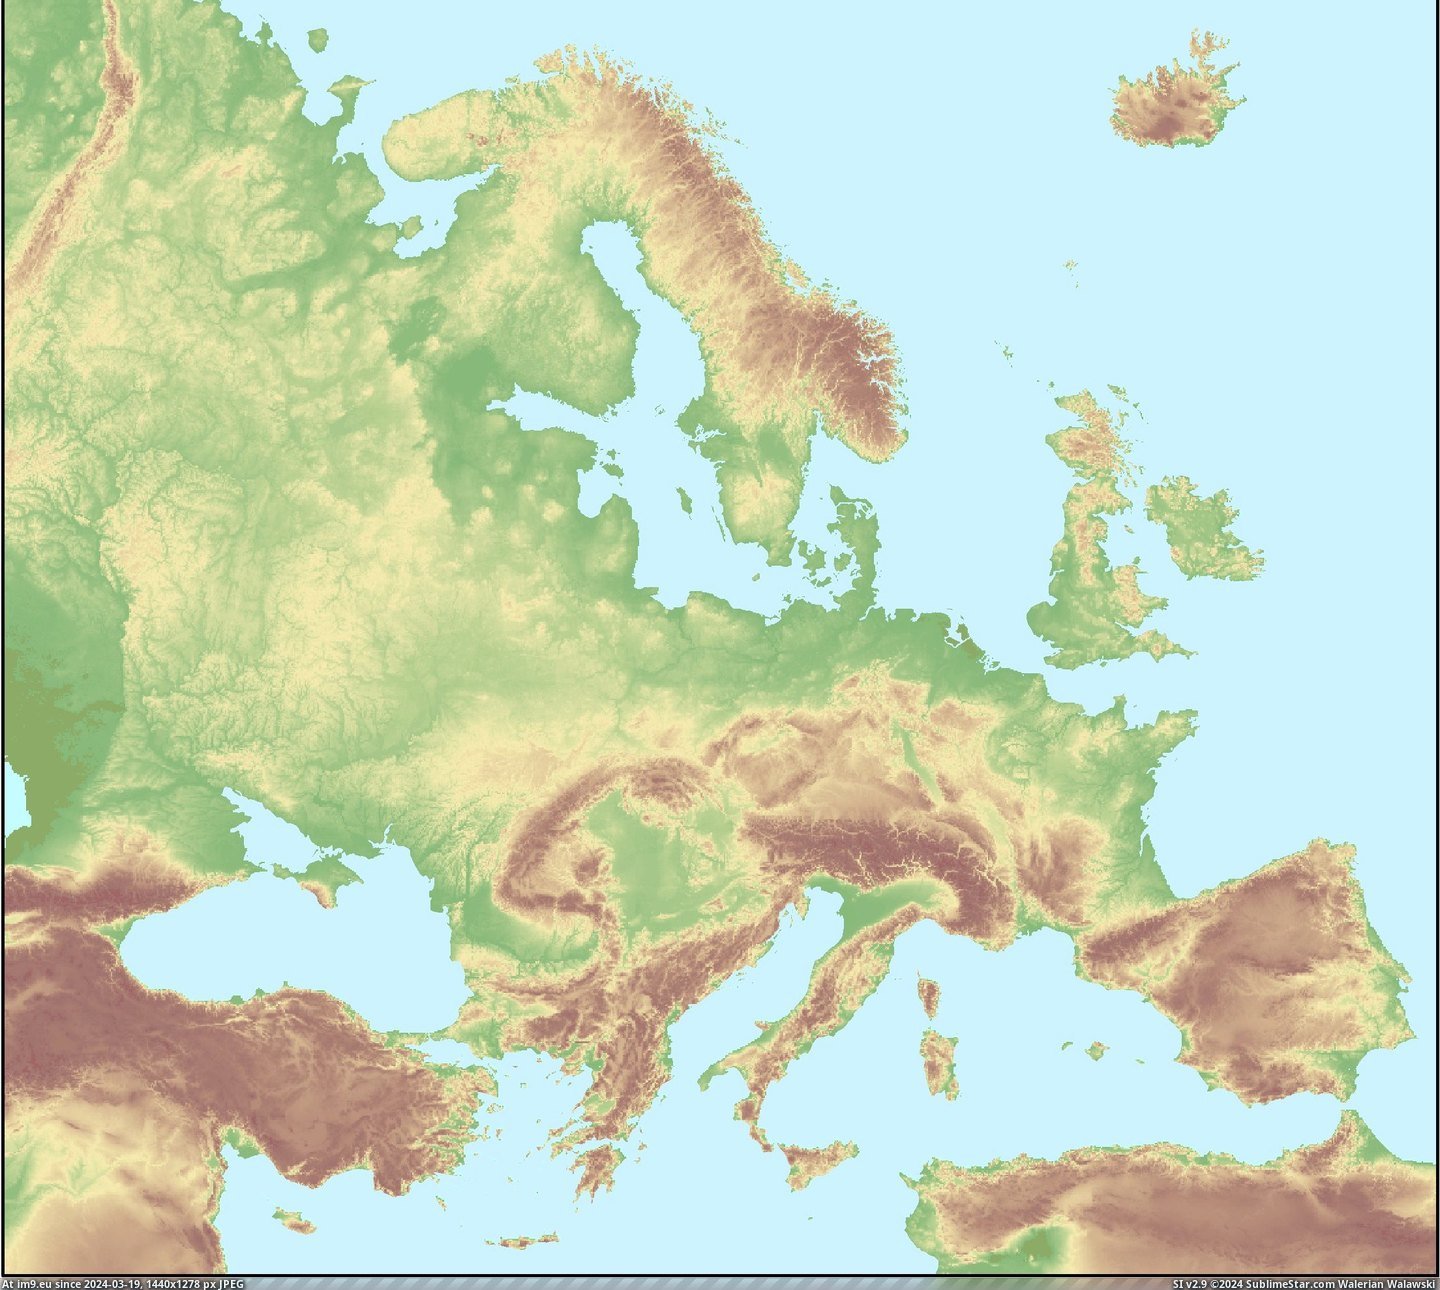  #Europe  [Mapporn] Europe backwards [2,208x1,971] Pic. (Изображение из альбом My r/MAPS favs))